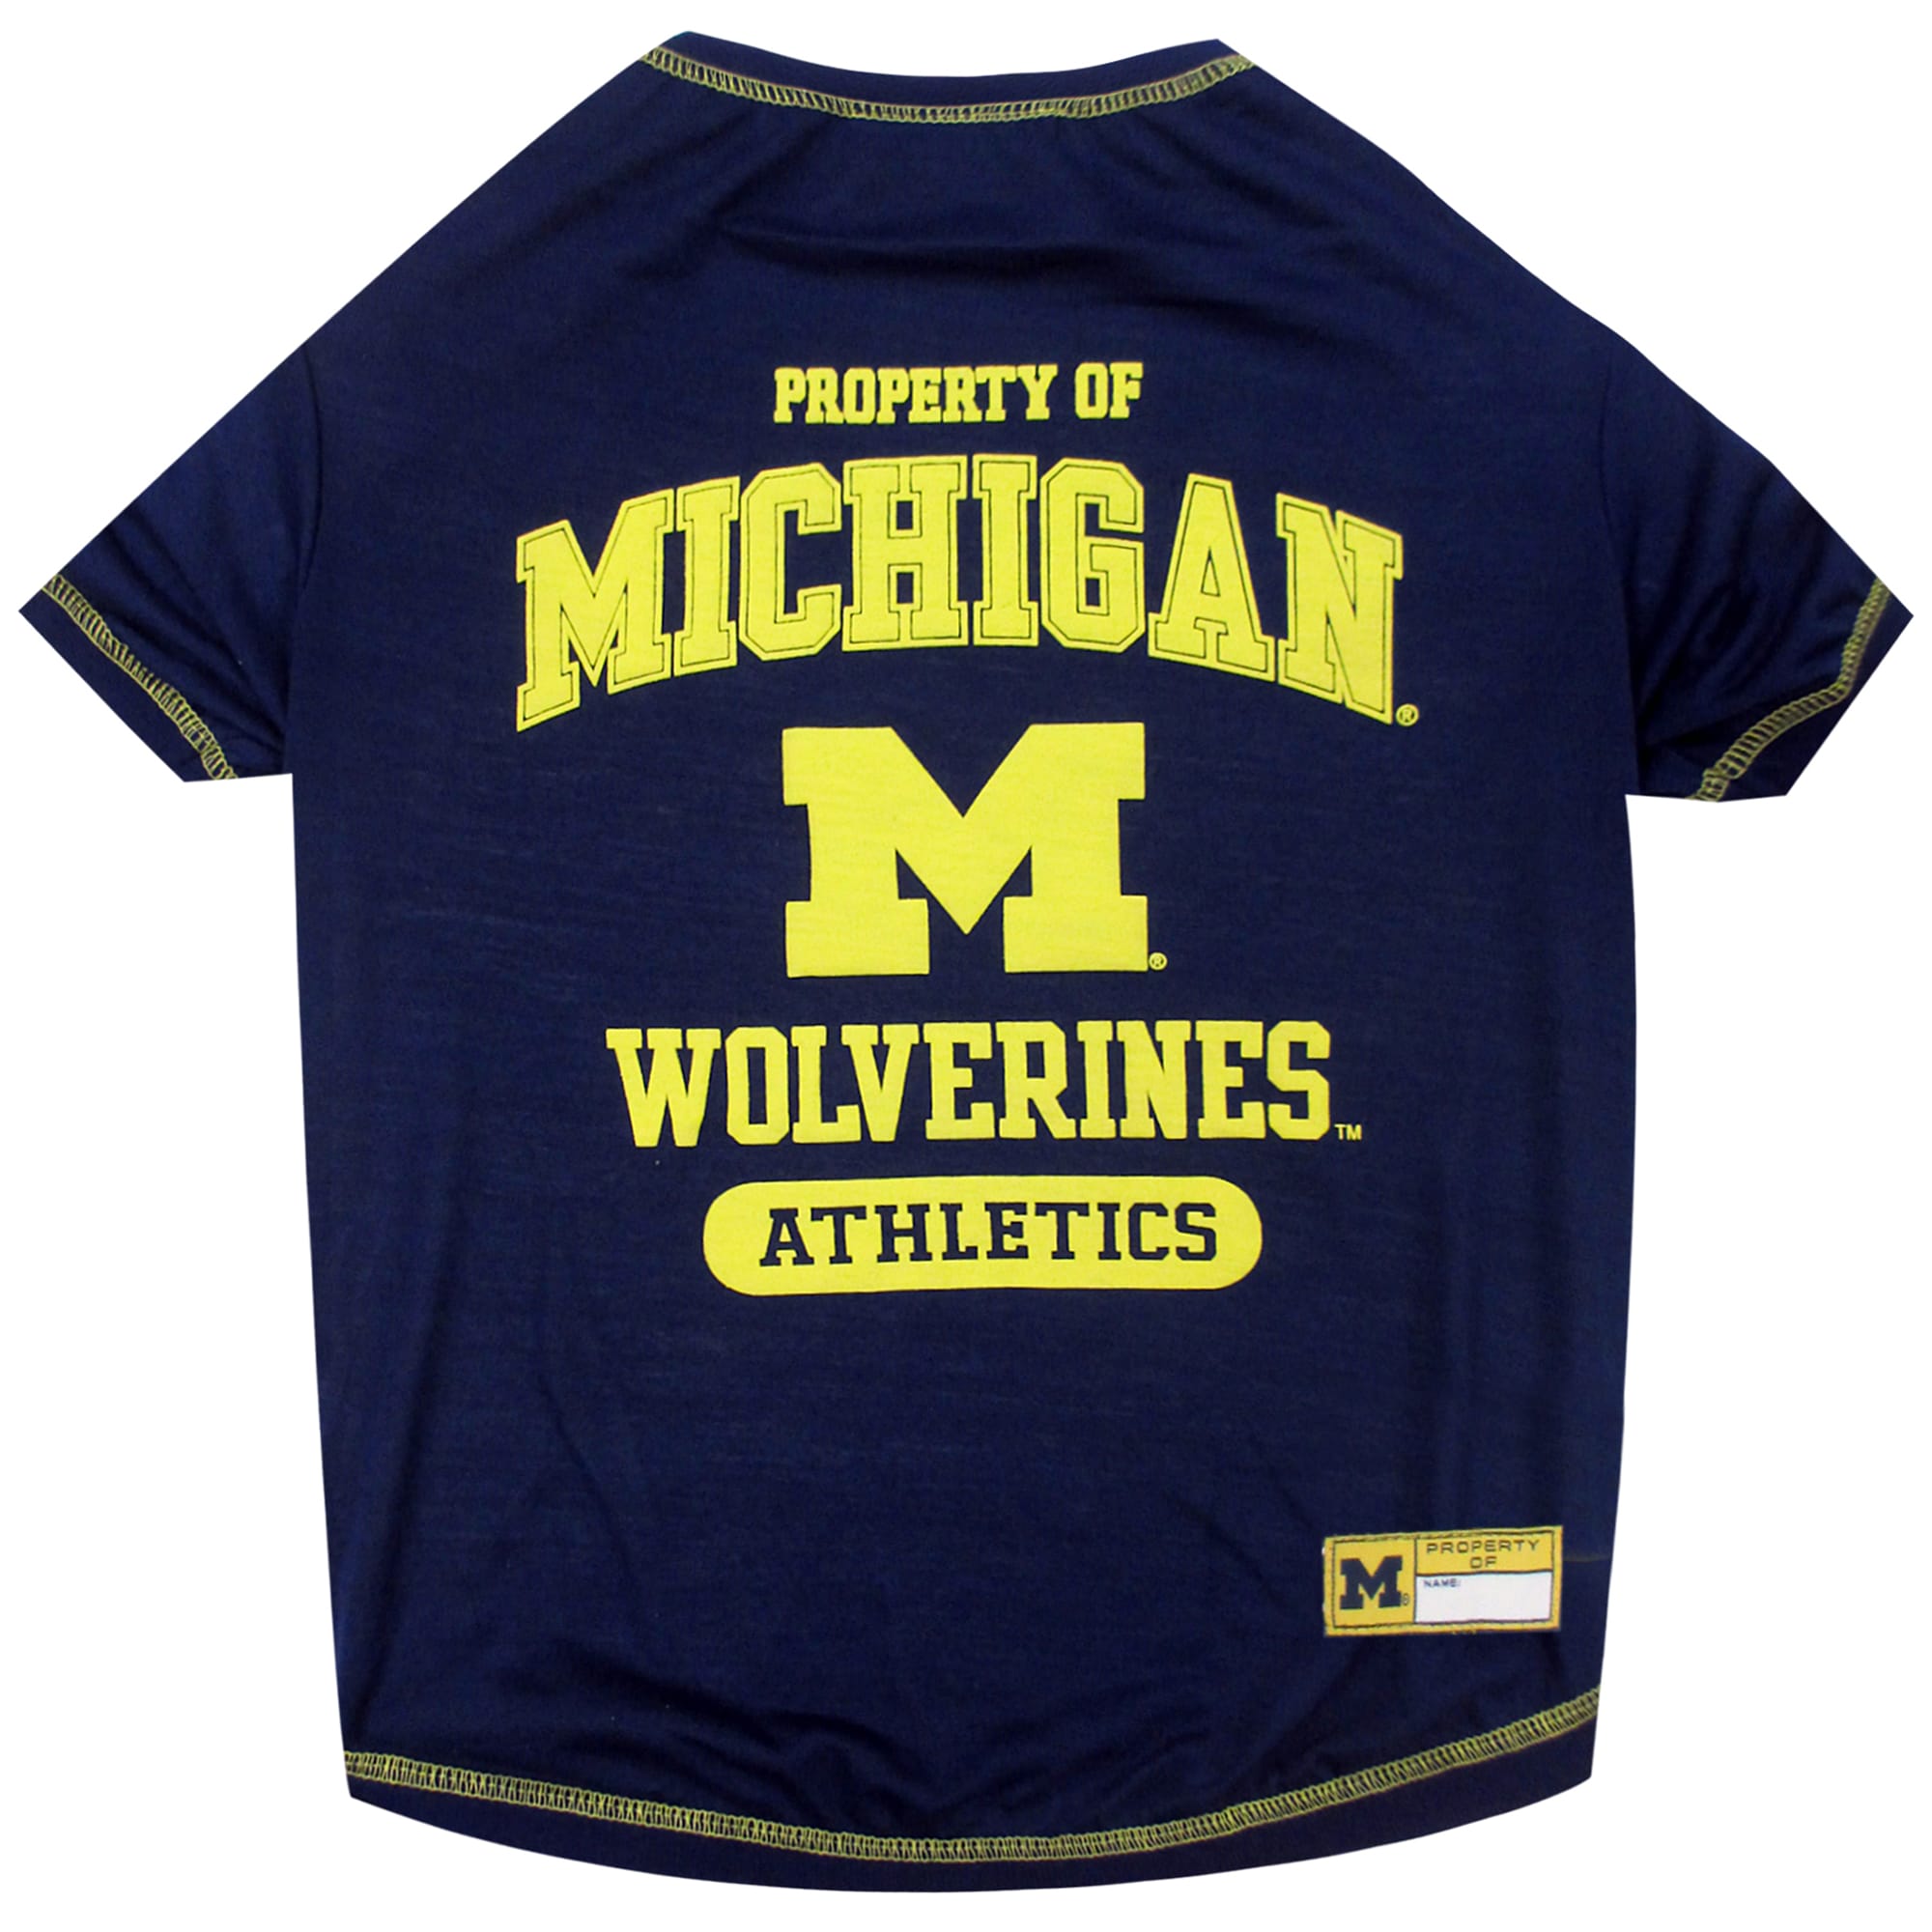 X-Small Pets First Michigan Hoodie T-Shirt